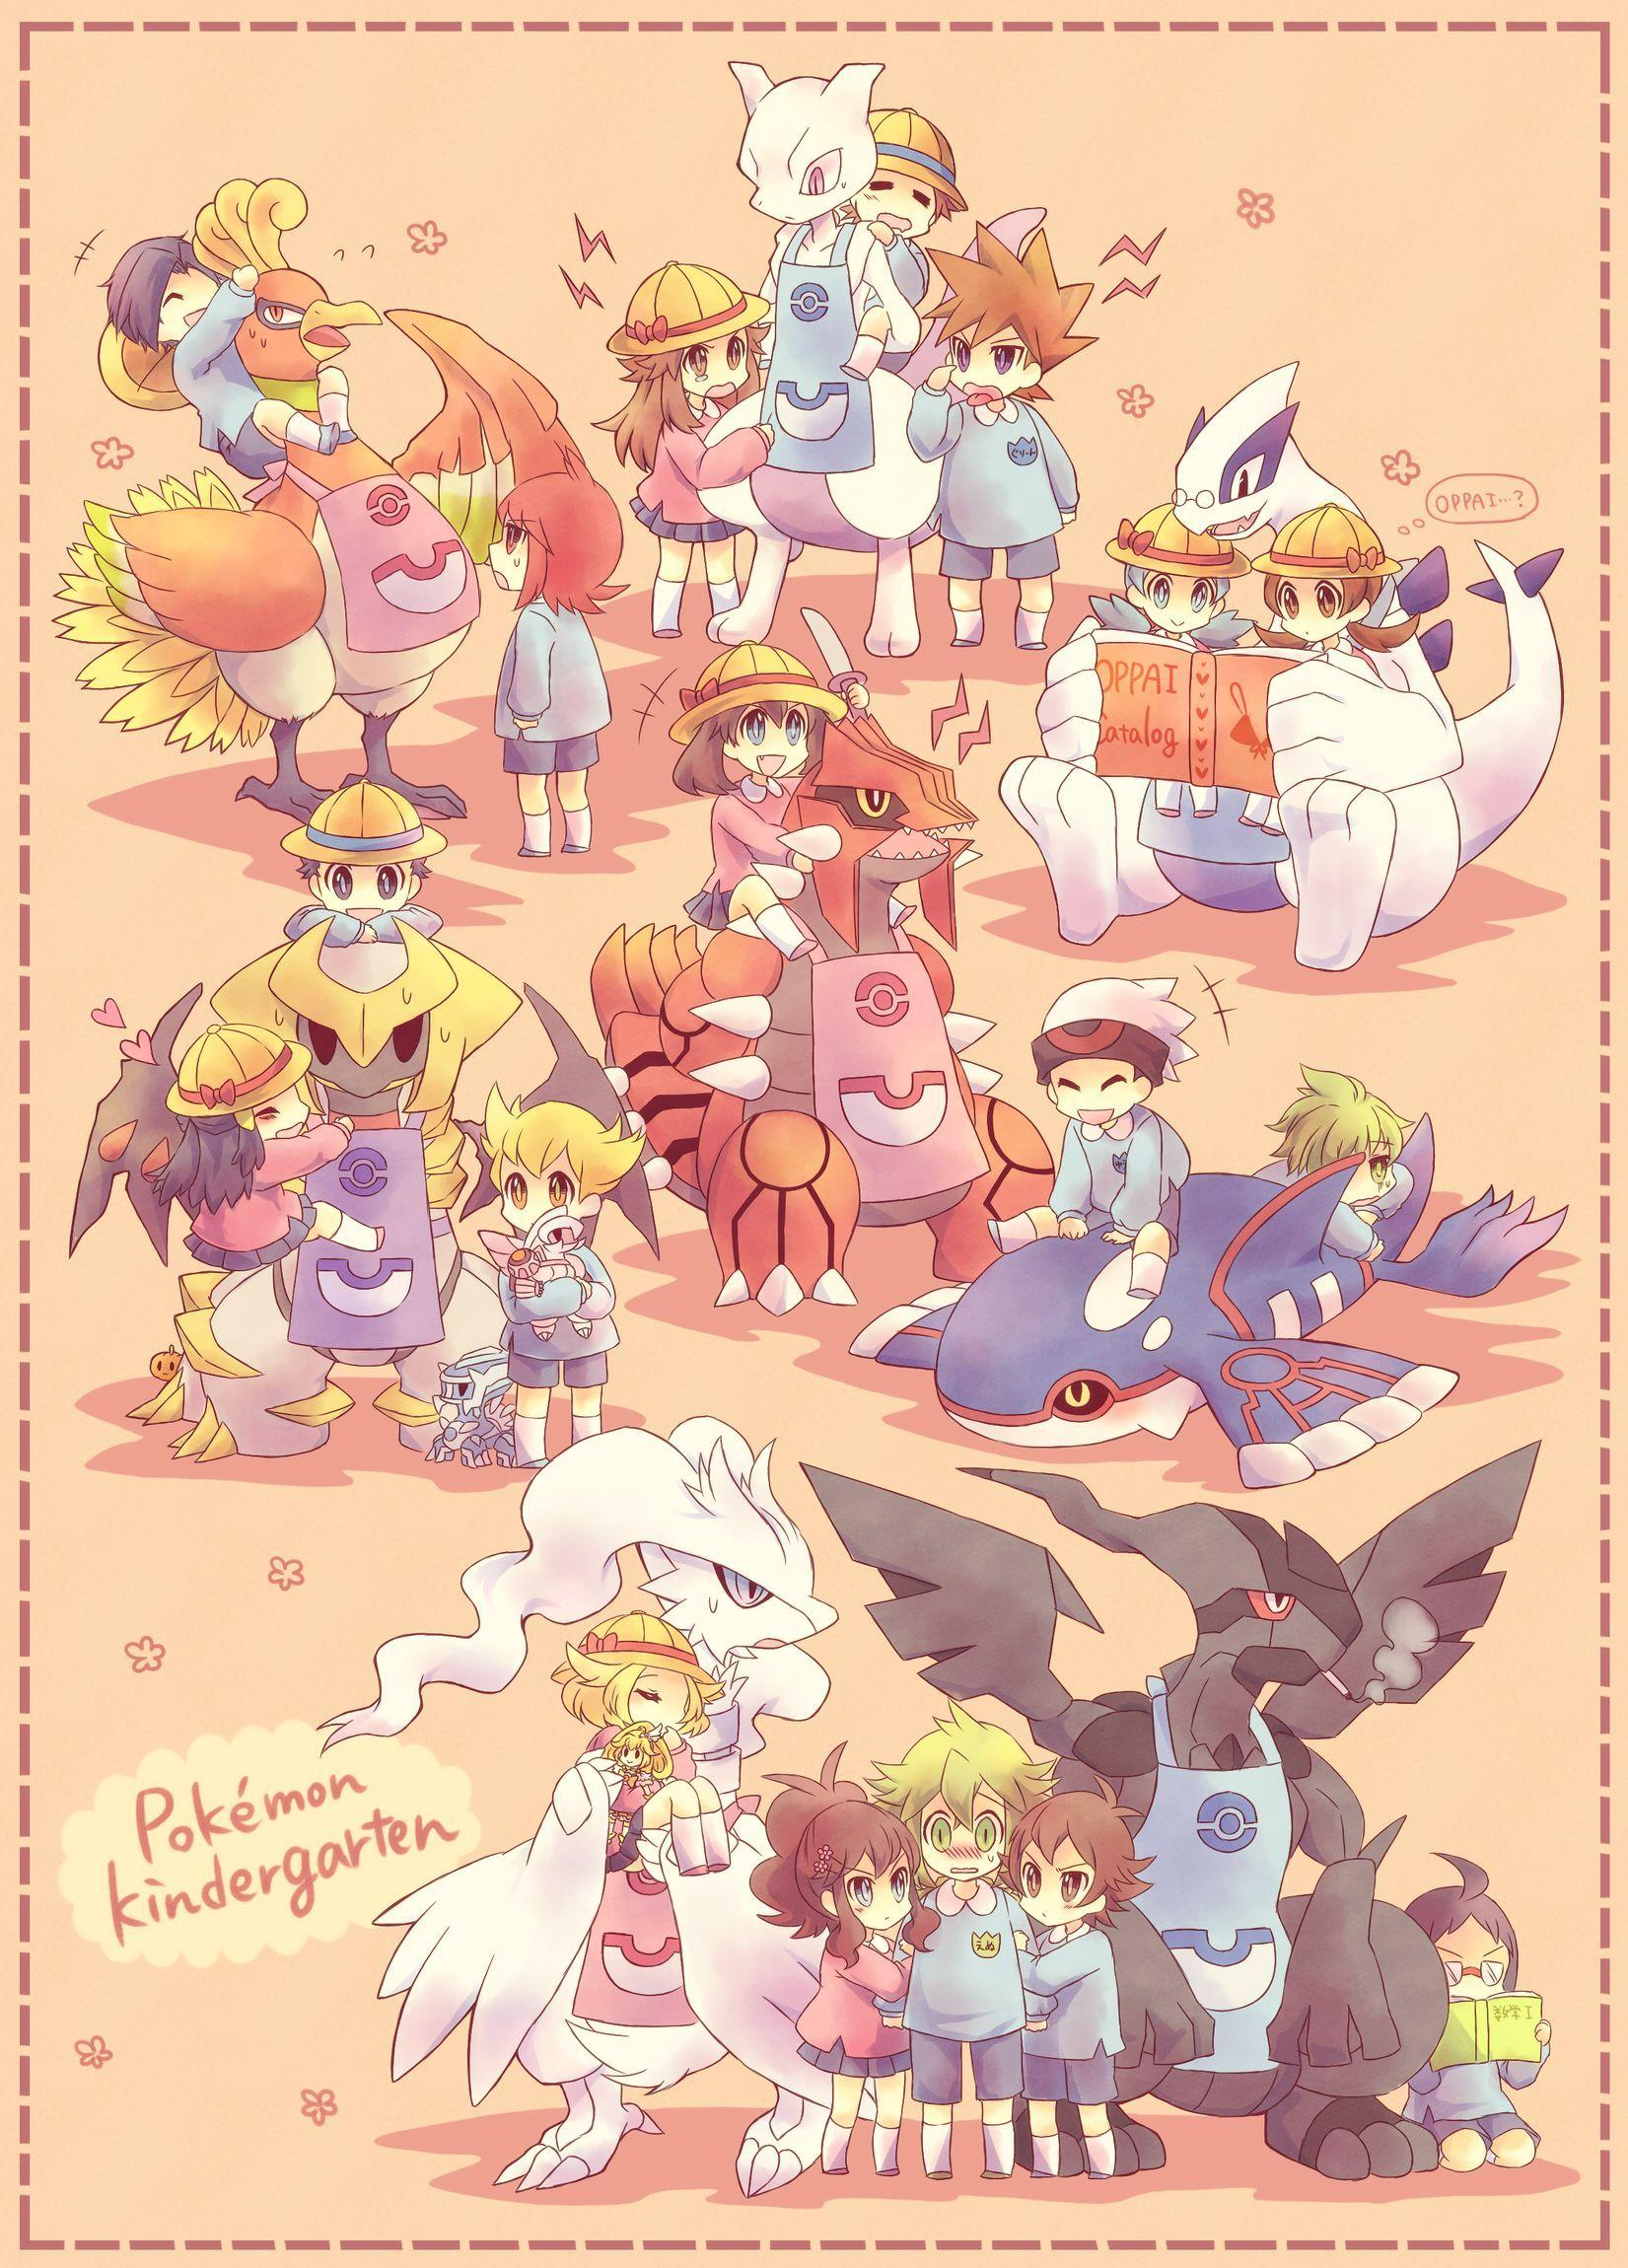 Pokémon Kindergarden. Kawaii Things. Pokémon, Anime